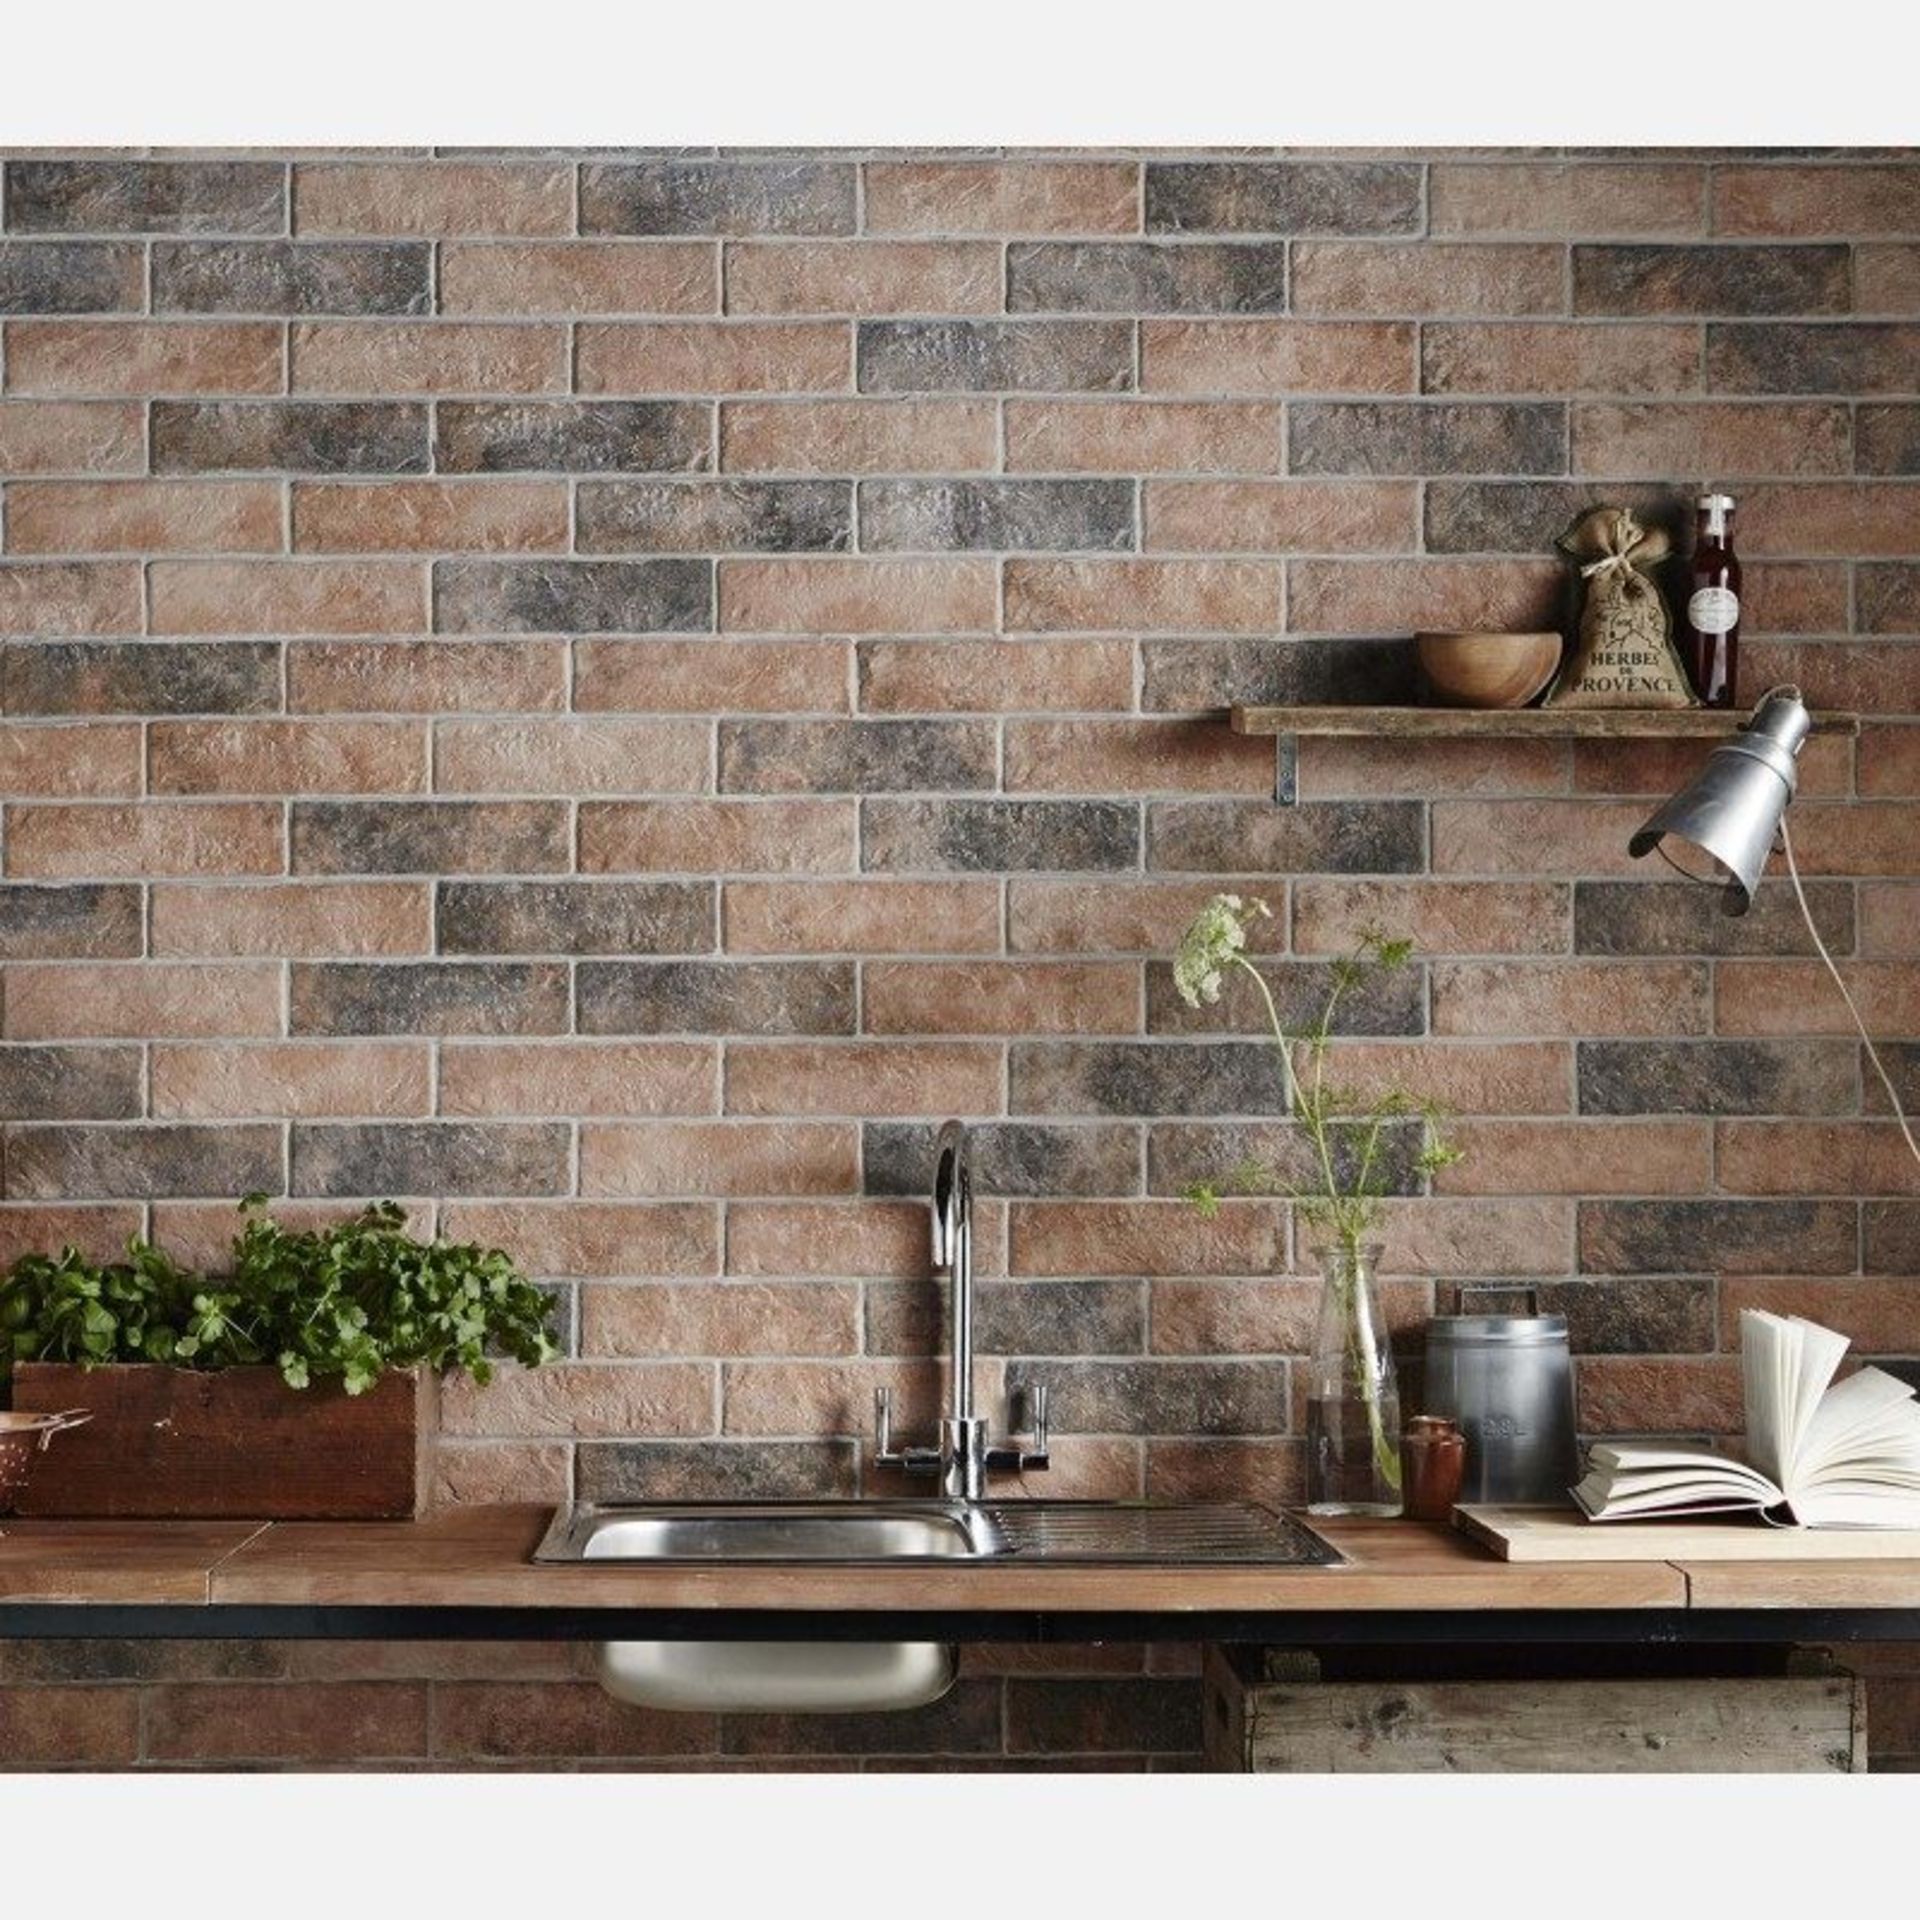 New 13.5m2 Brick Tile Rustic Ceramic Wall Tiles Carrelage Mural. 9.5mm Thickness, 250x500mm Per